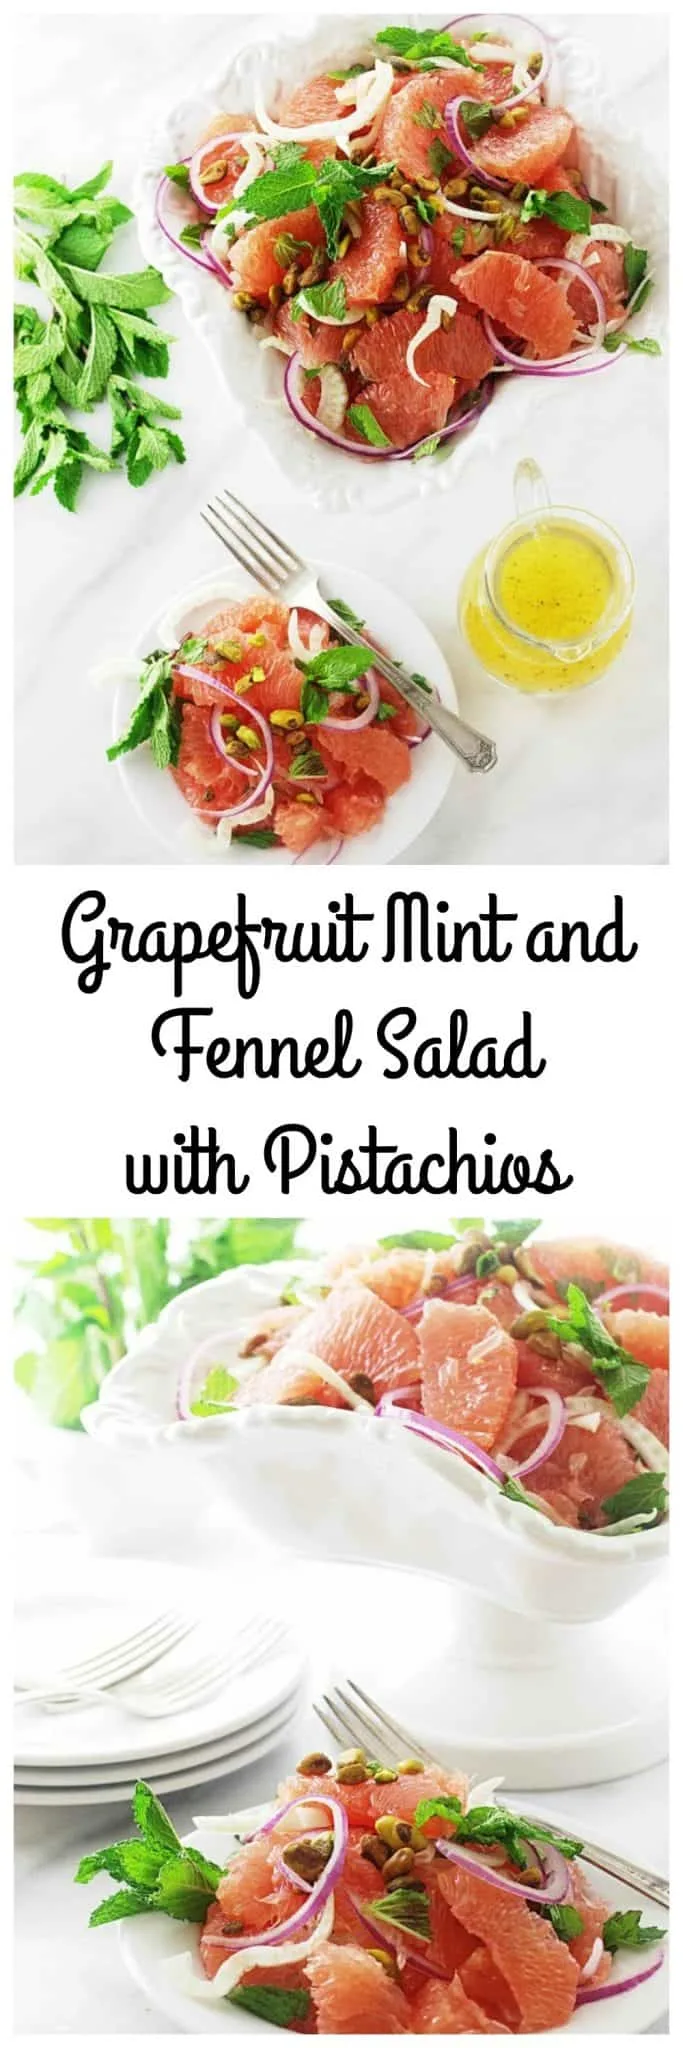 grapefruit, mint and fennel salad with pistachios